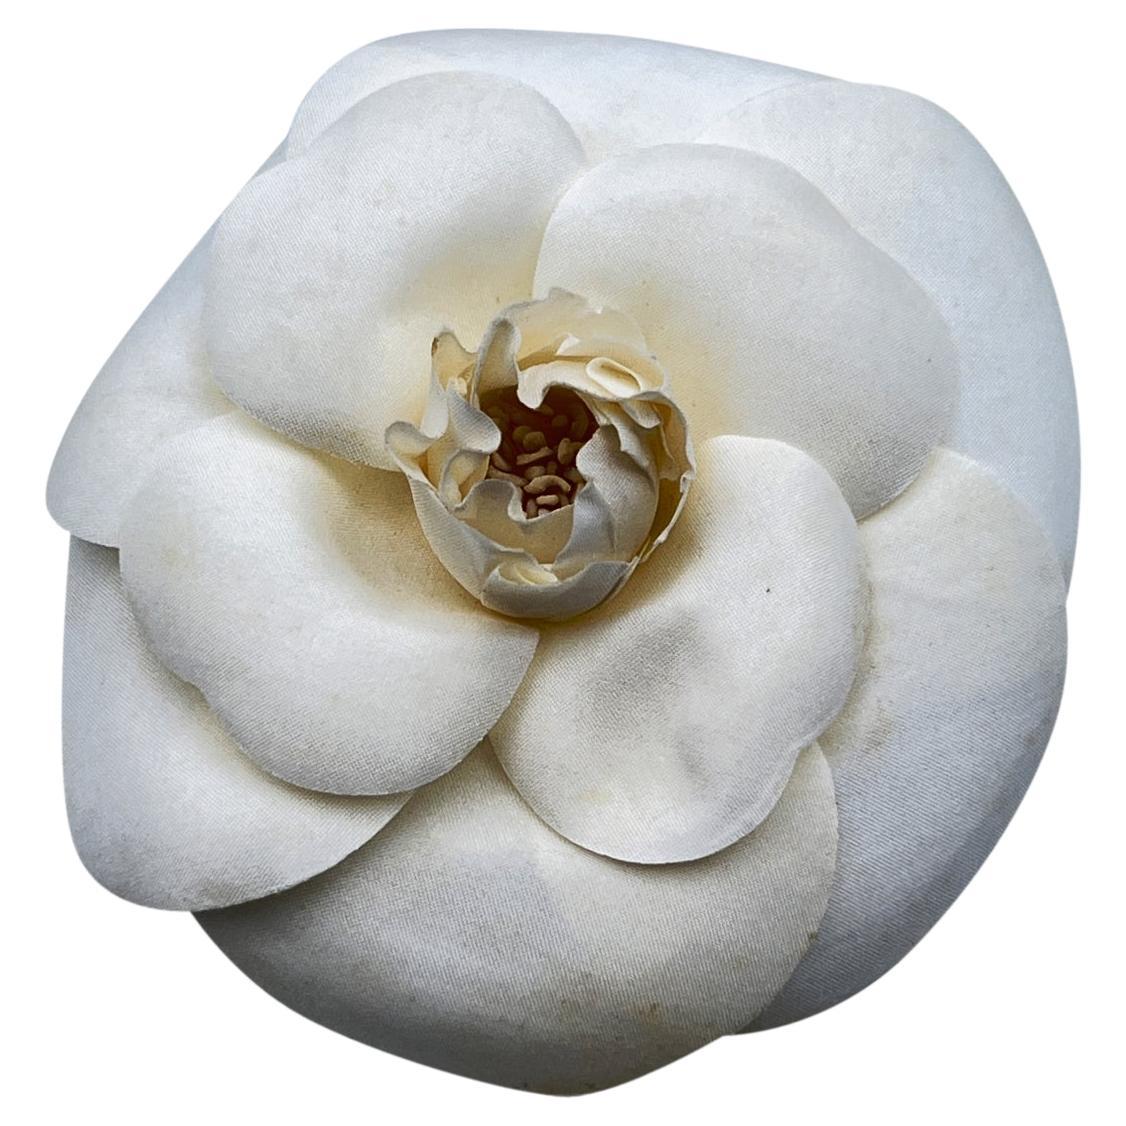 Chanel Camellia Black Flower Brooch